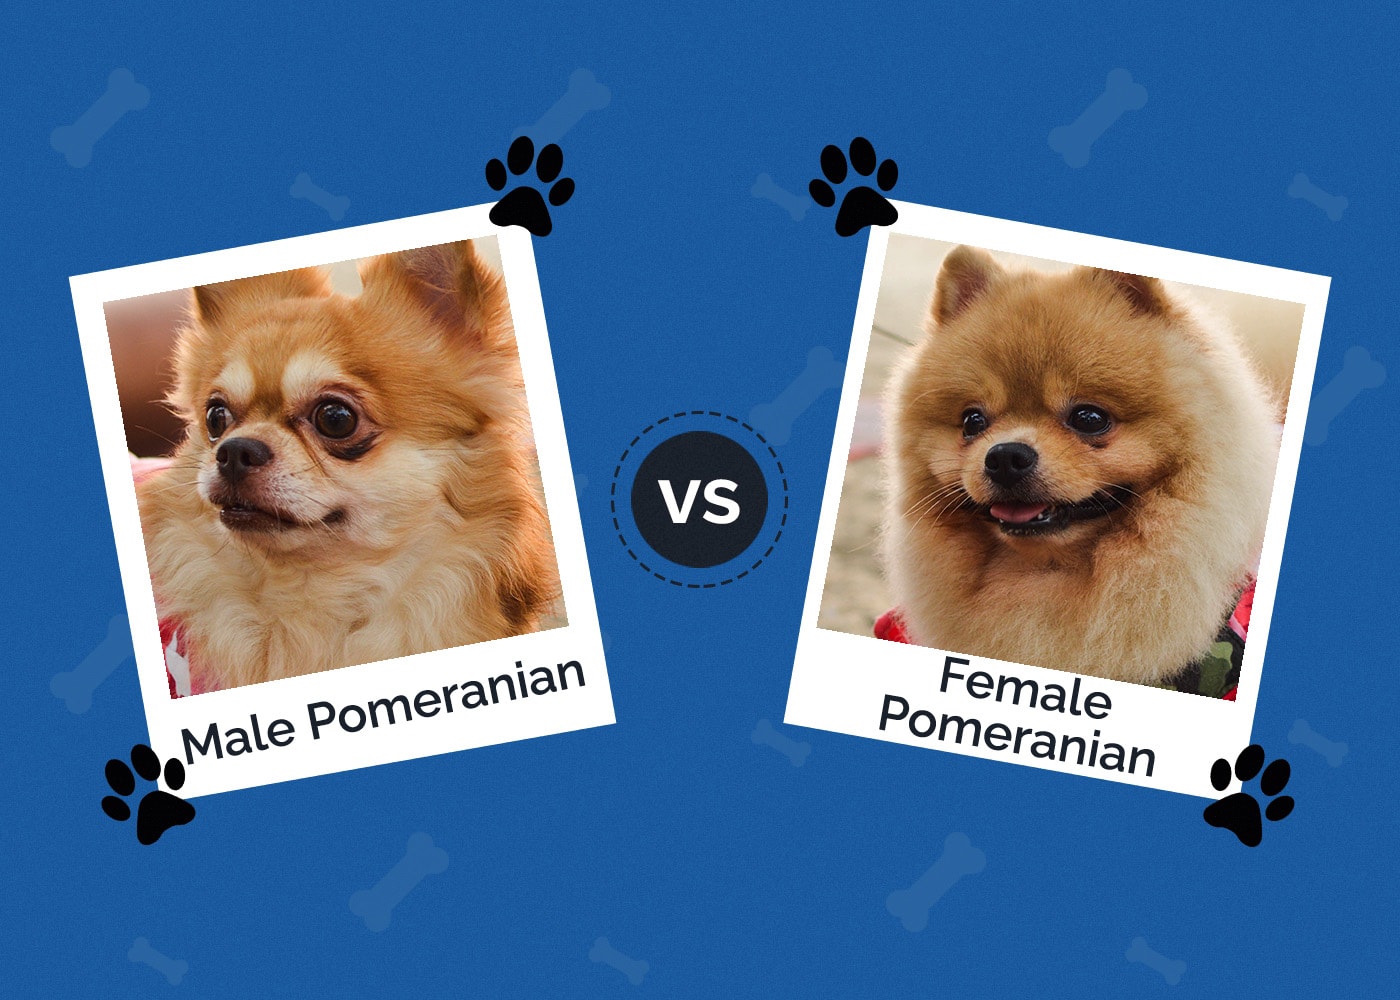 Male vs Female Pomeranian